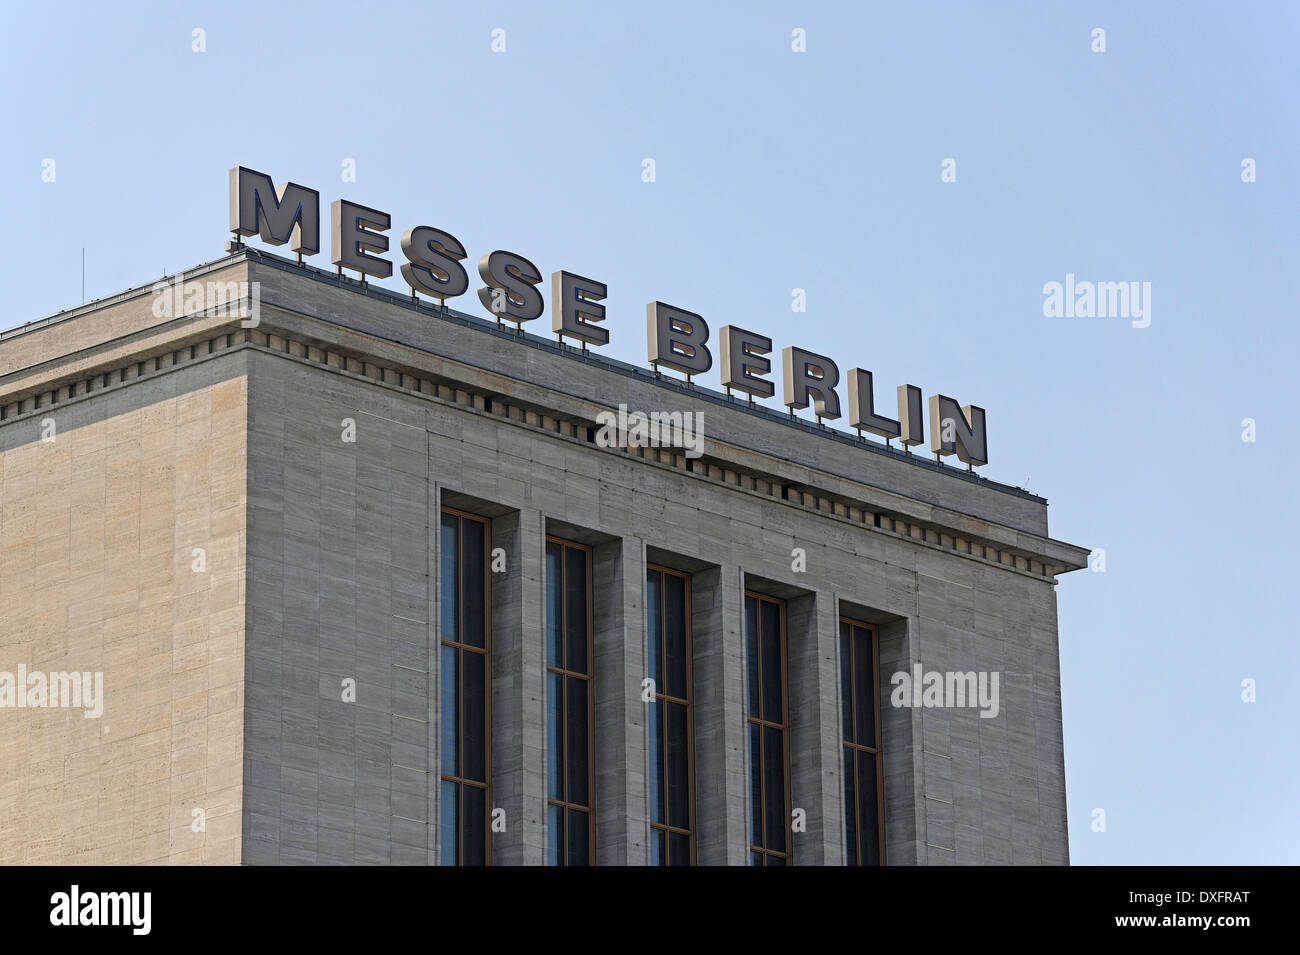 Historic main entrance and logo, Messe Berlin, Masurenallee, Berlin, Germany Stock Photo